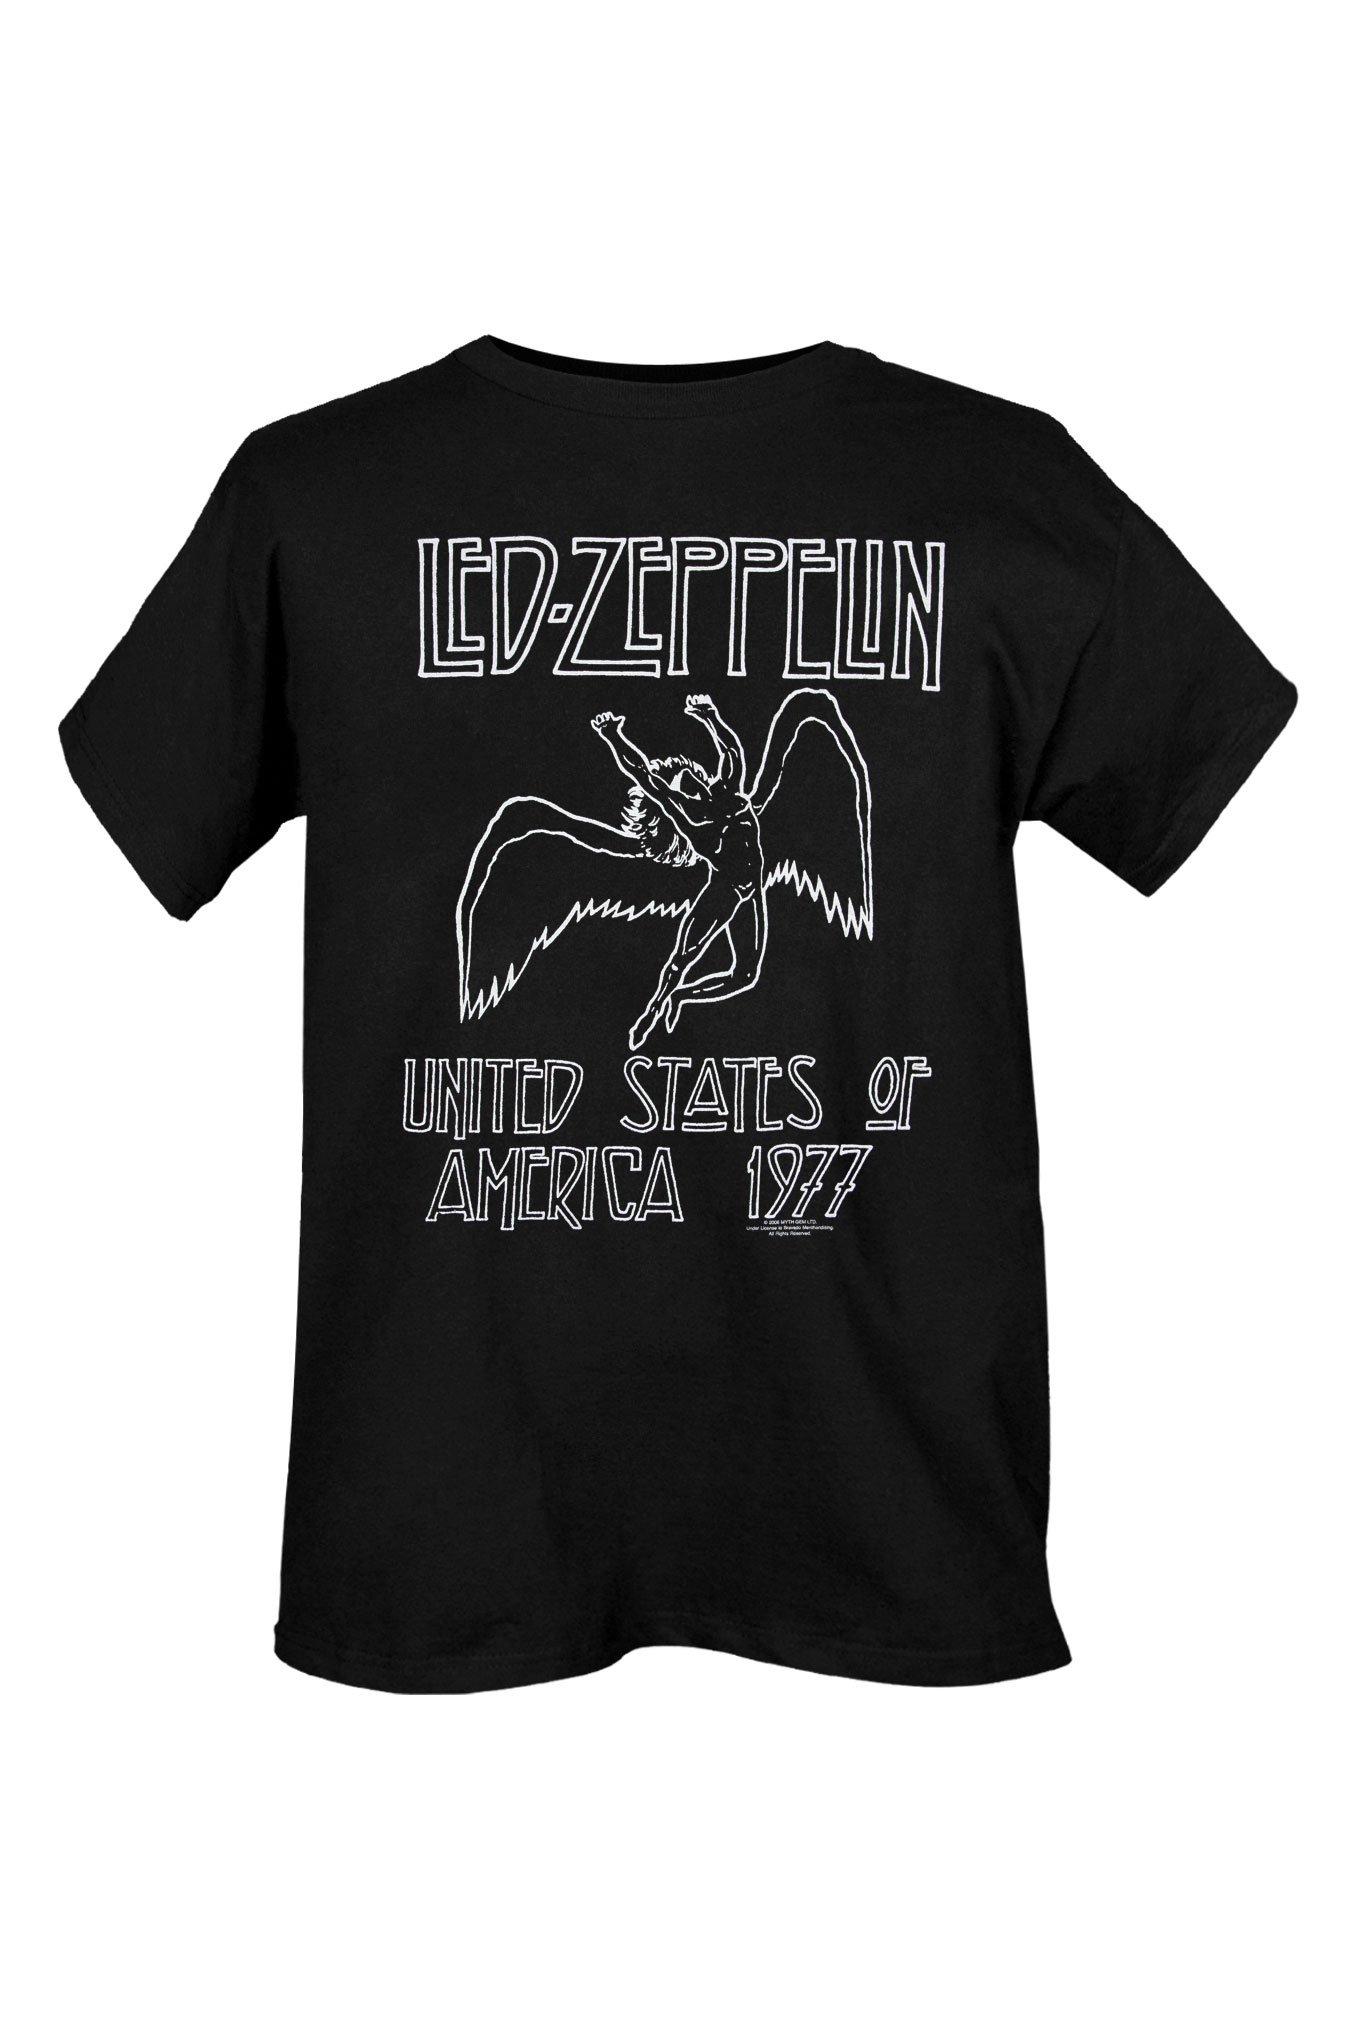 Led Zeppelin United States Of America 1977 Tour T-Shirt, BLACK, hi-res